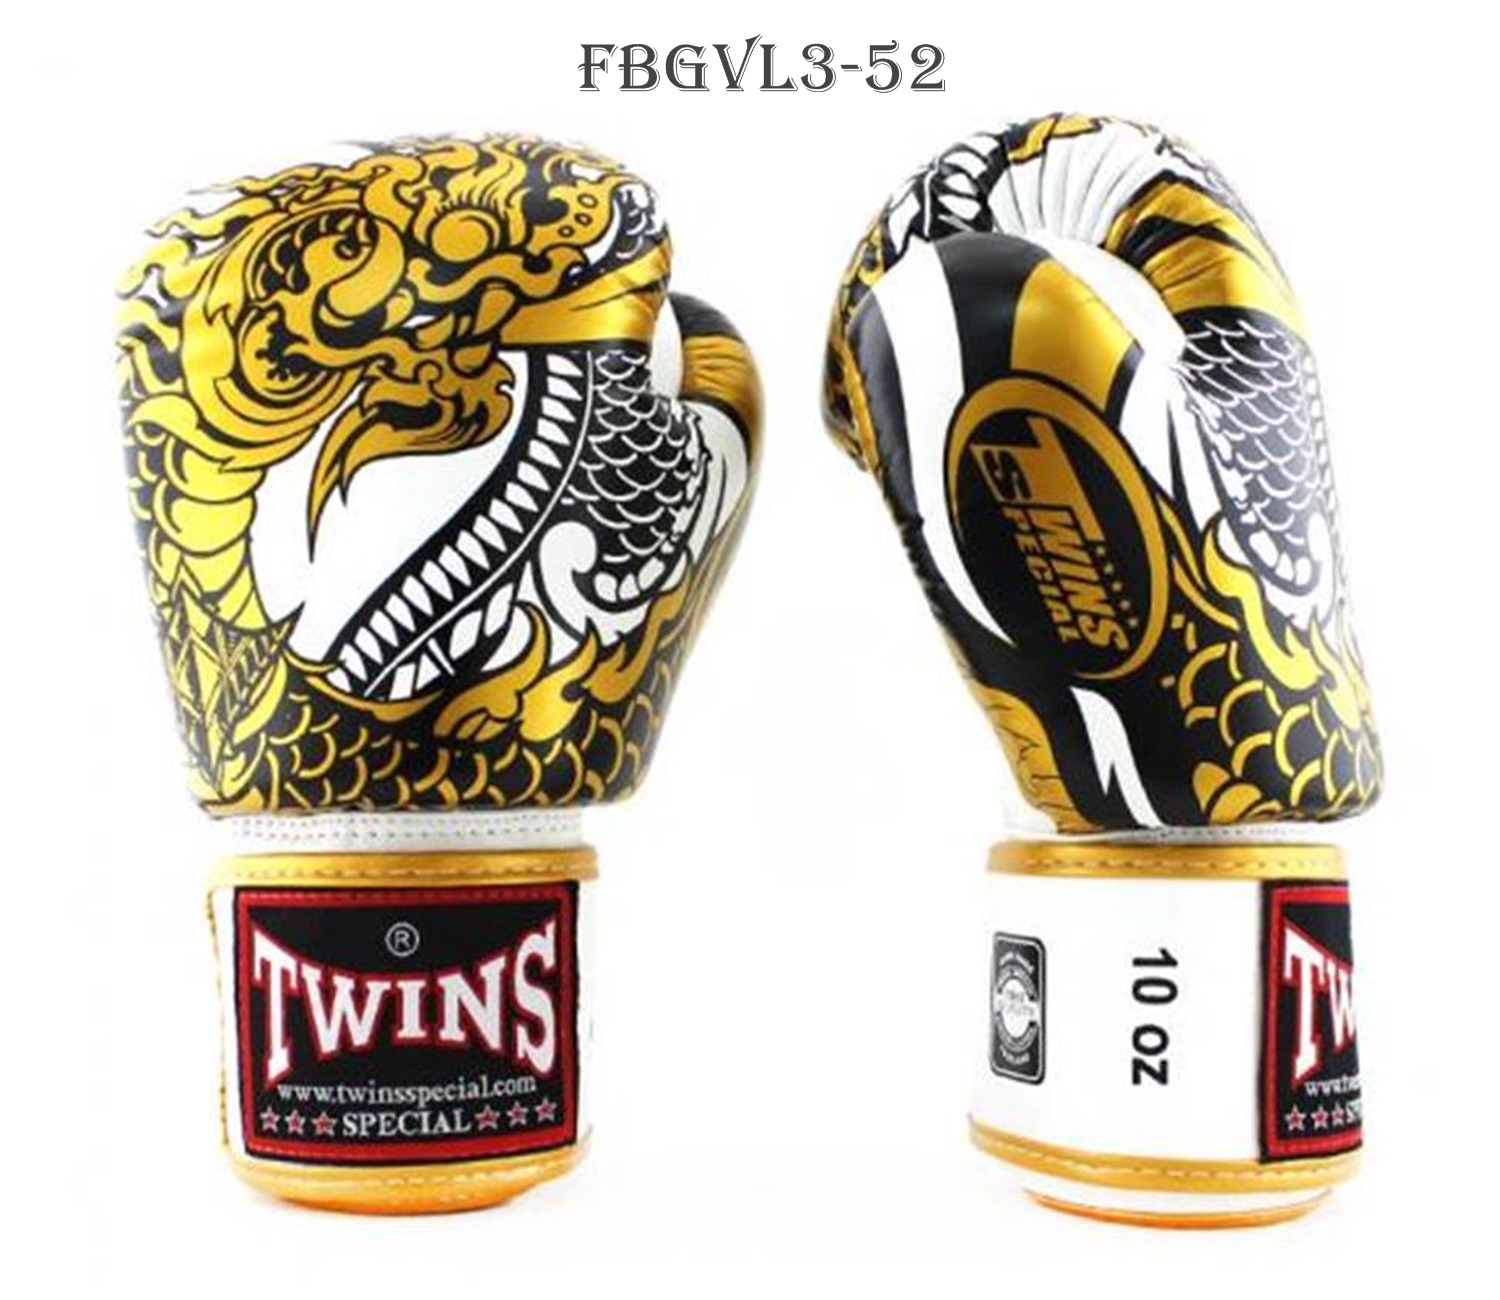 Twins special Boxing Gloves Fancy FBGVL3-52 Nagas White Gold  (14,16 oz.)  Muay Thai Sparring MMA K1 นวมซ้อมชกทวินส์ สเปเชี่ยล แฟนซี สีขาว ทอง หนังแท้ 100%